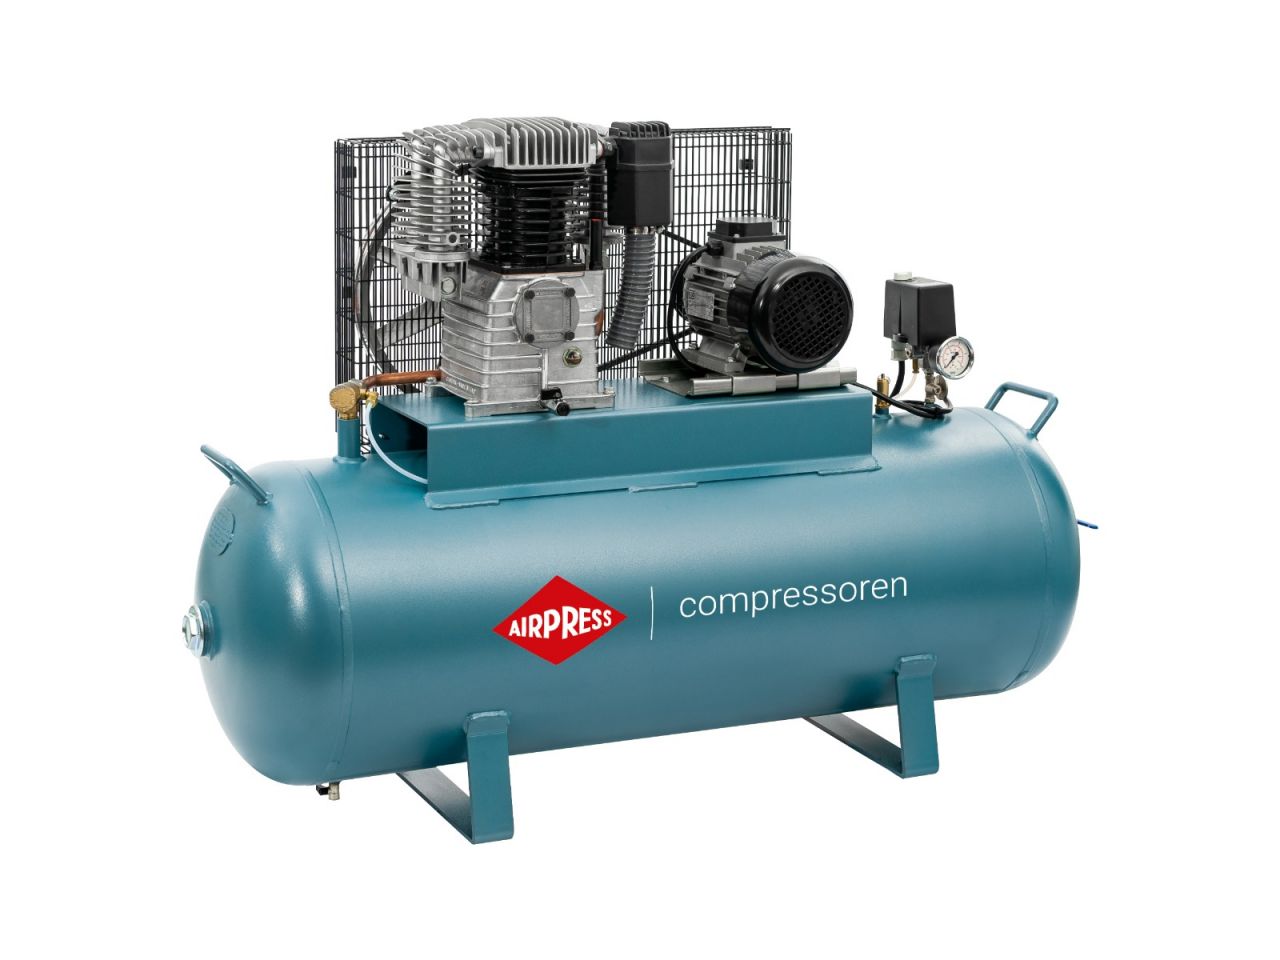 Compresor K 200-450